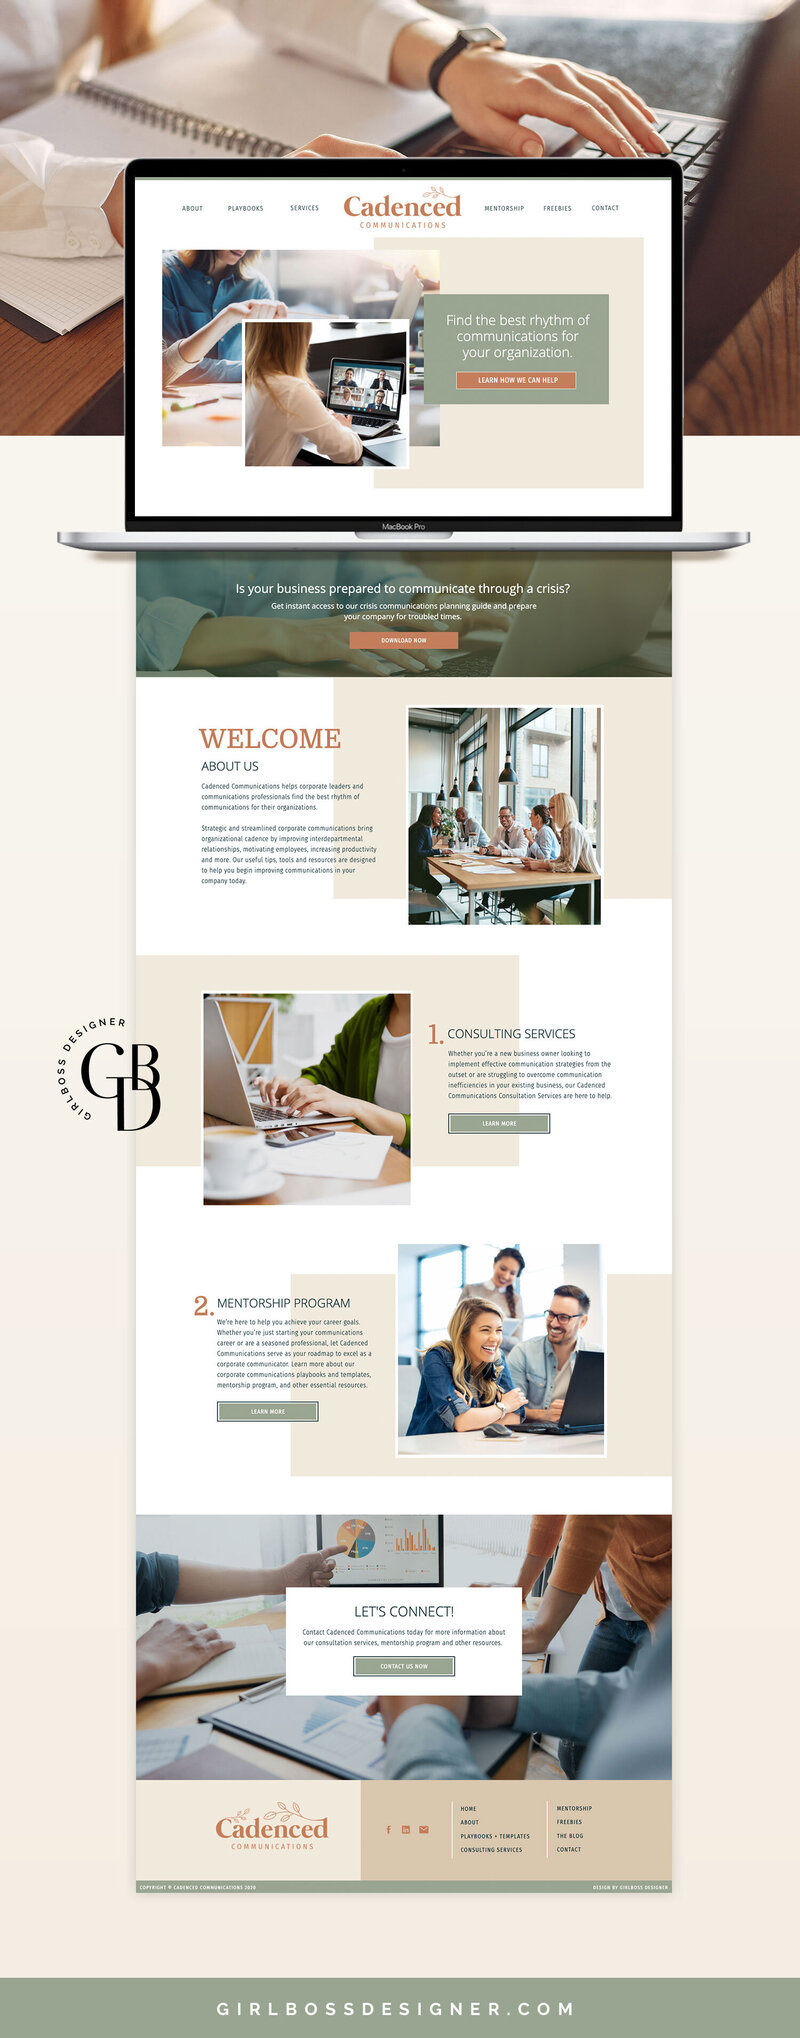 Girlboss-Designer-Website-Design-Cadenced-Communications-2